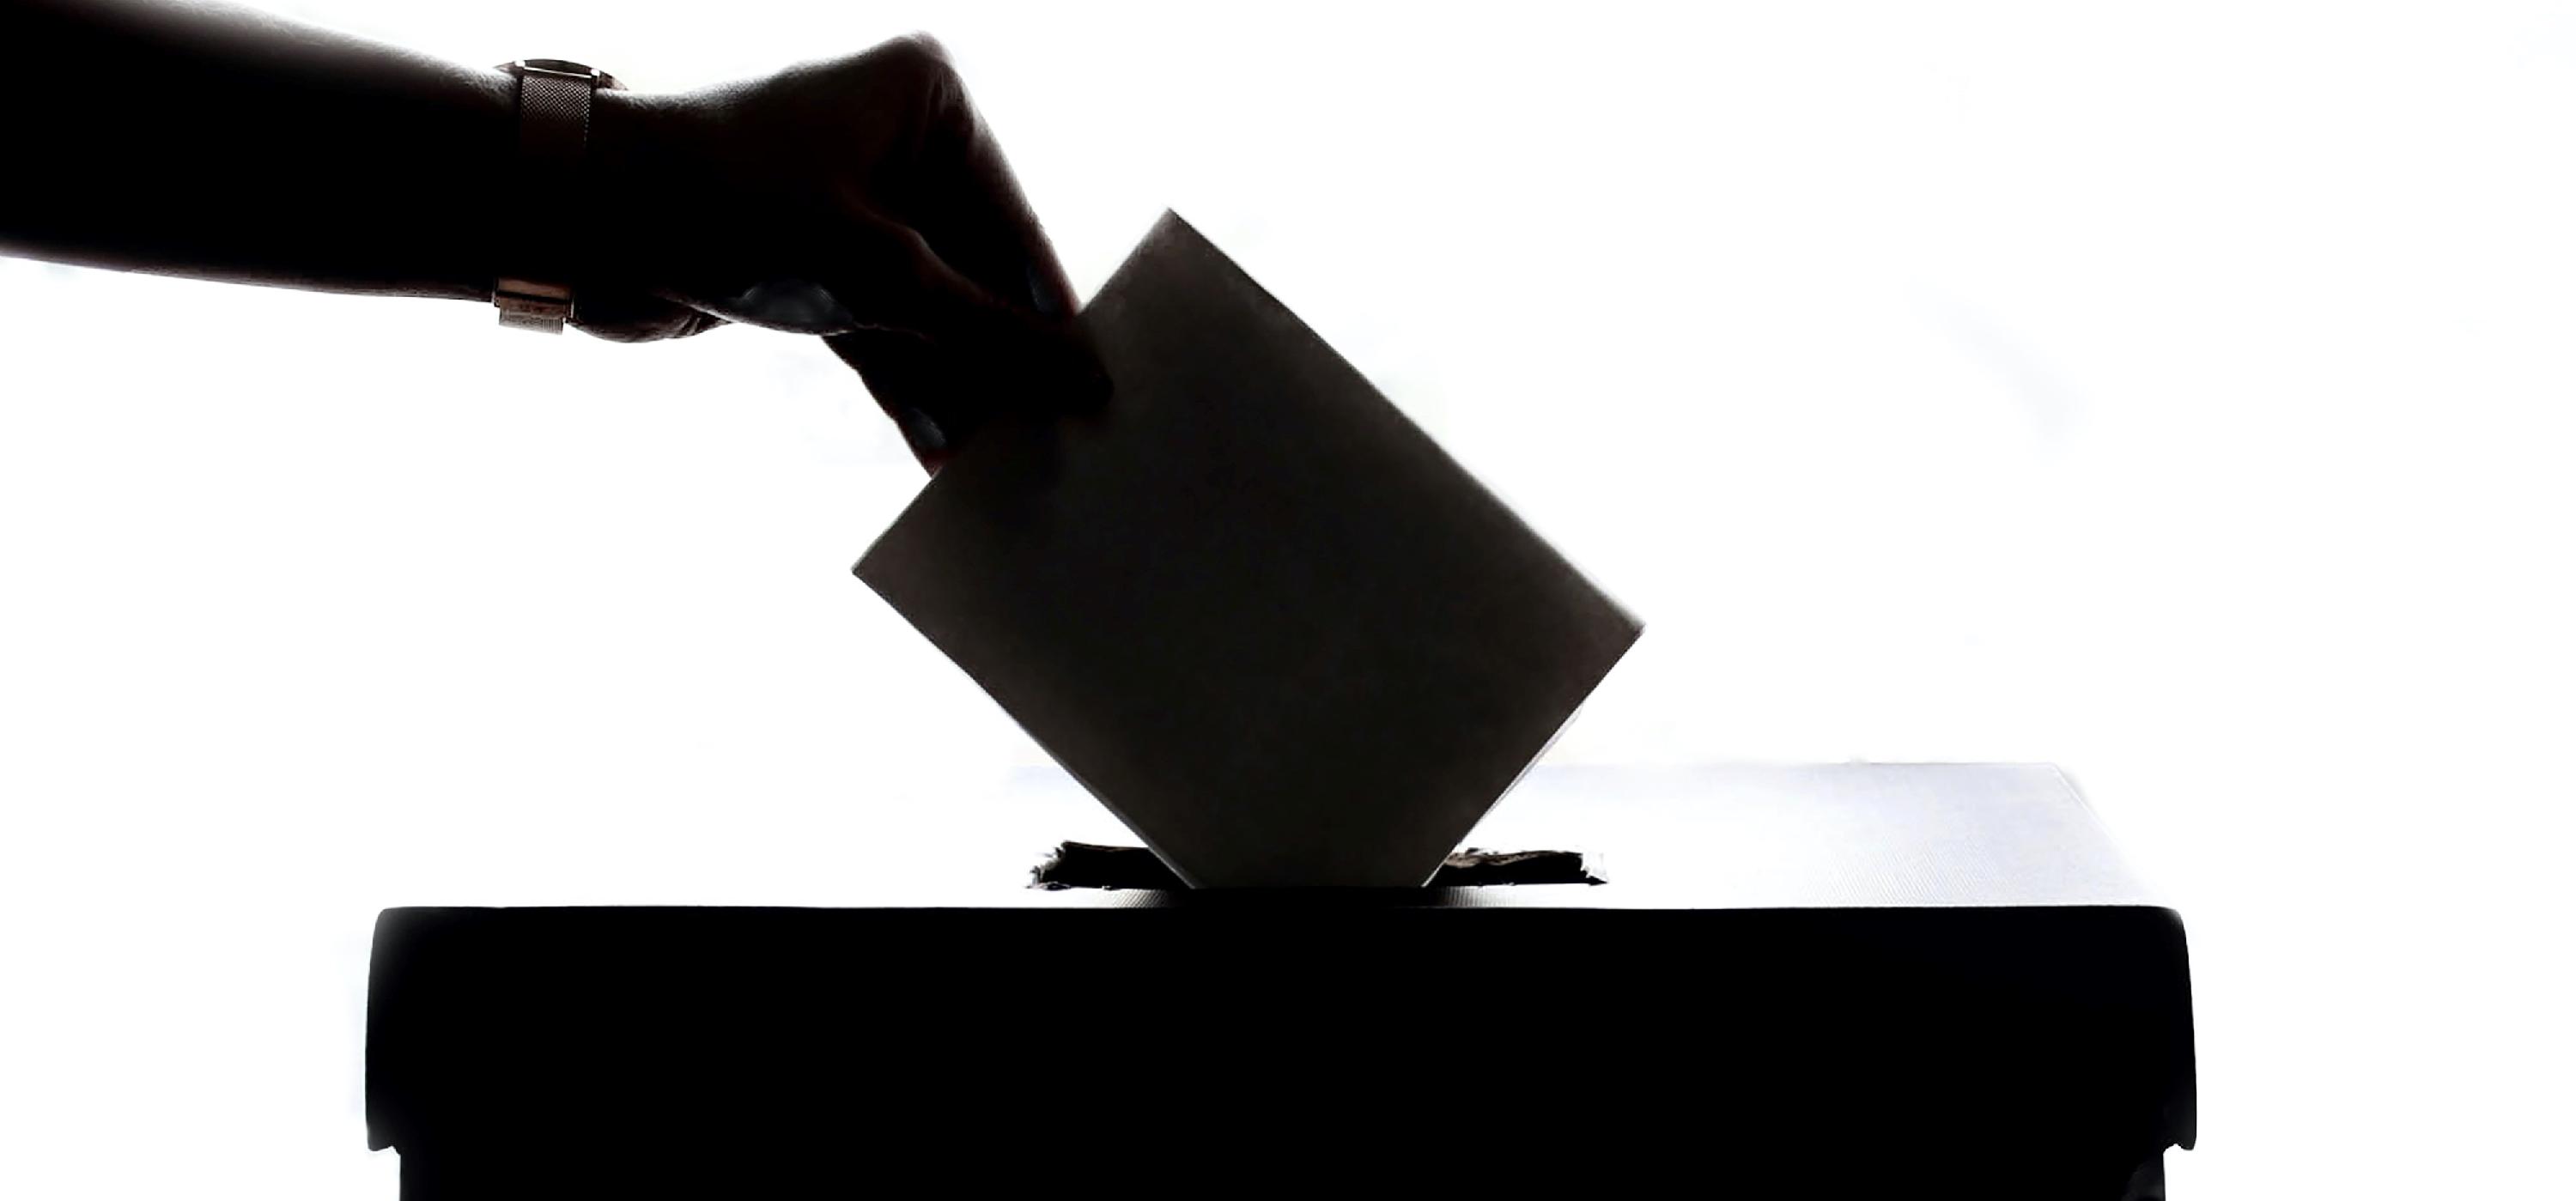 Hand placing envelope in ballot box